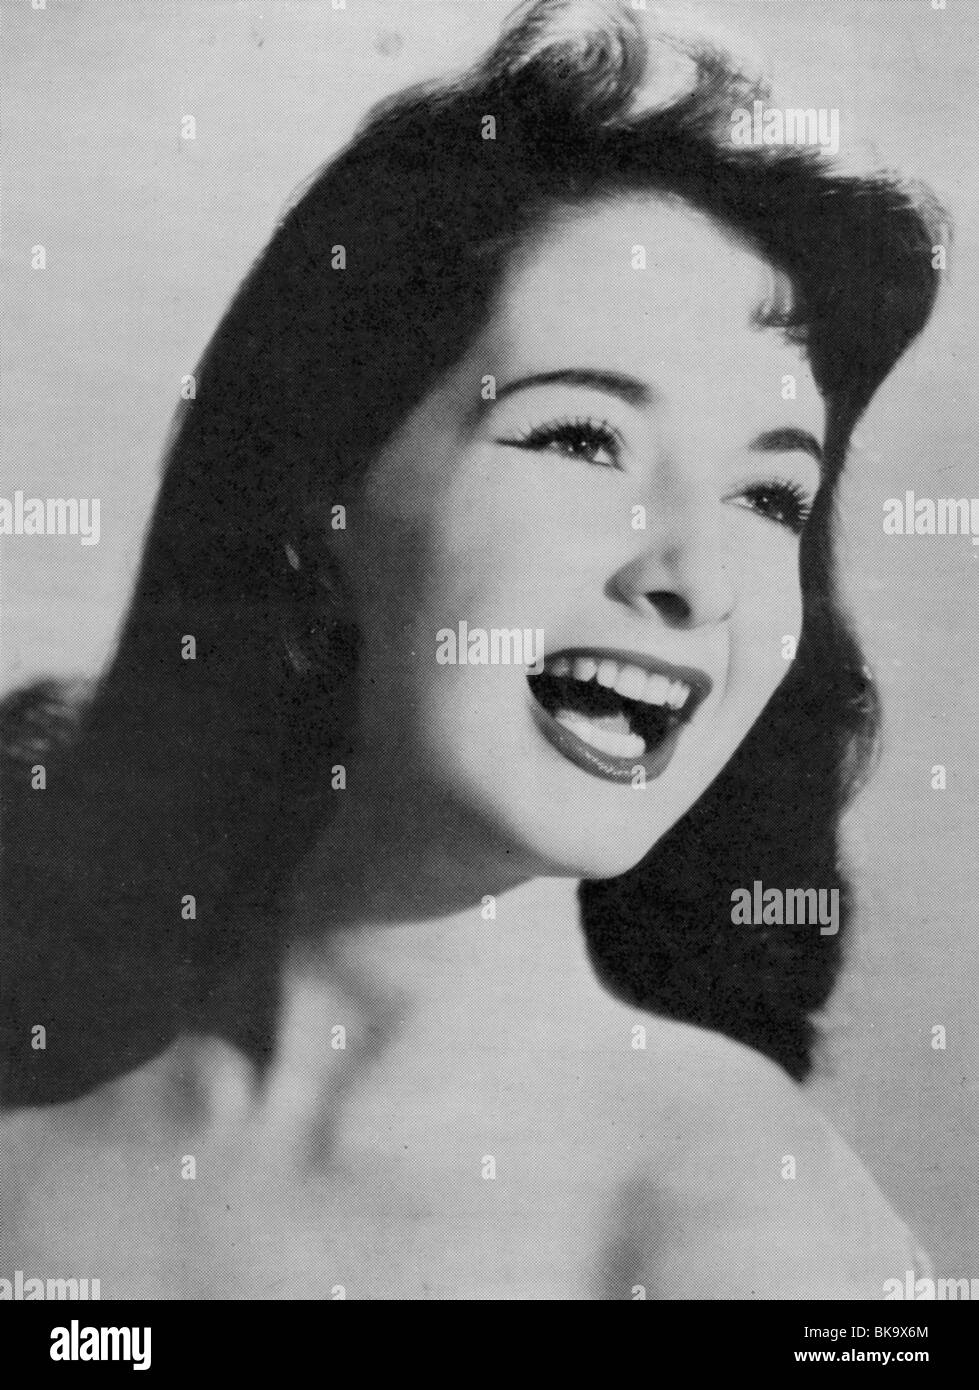 GLENDA COLLINS - UK pop singer about 1960 Stock Photo